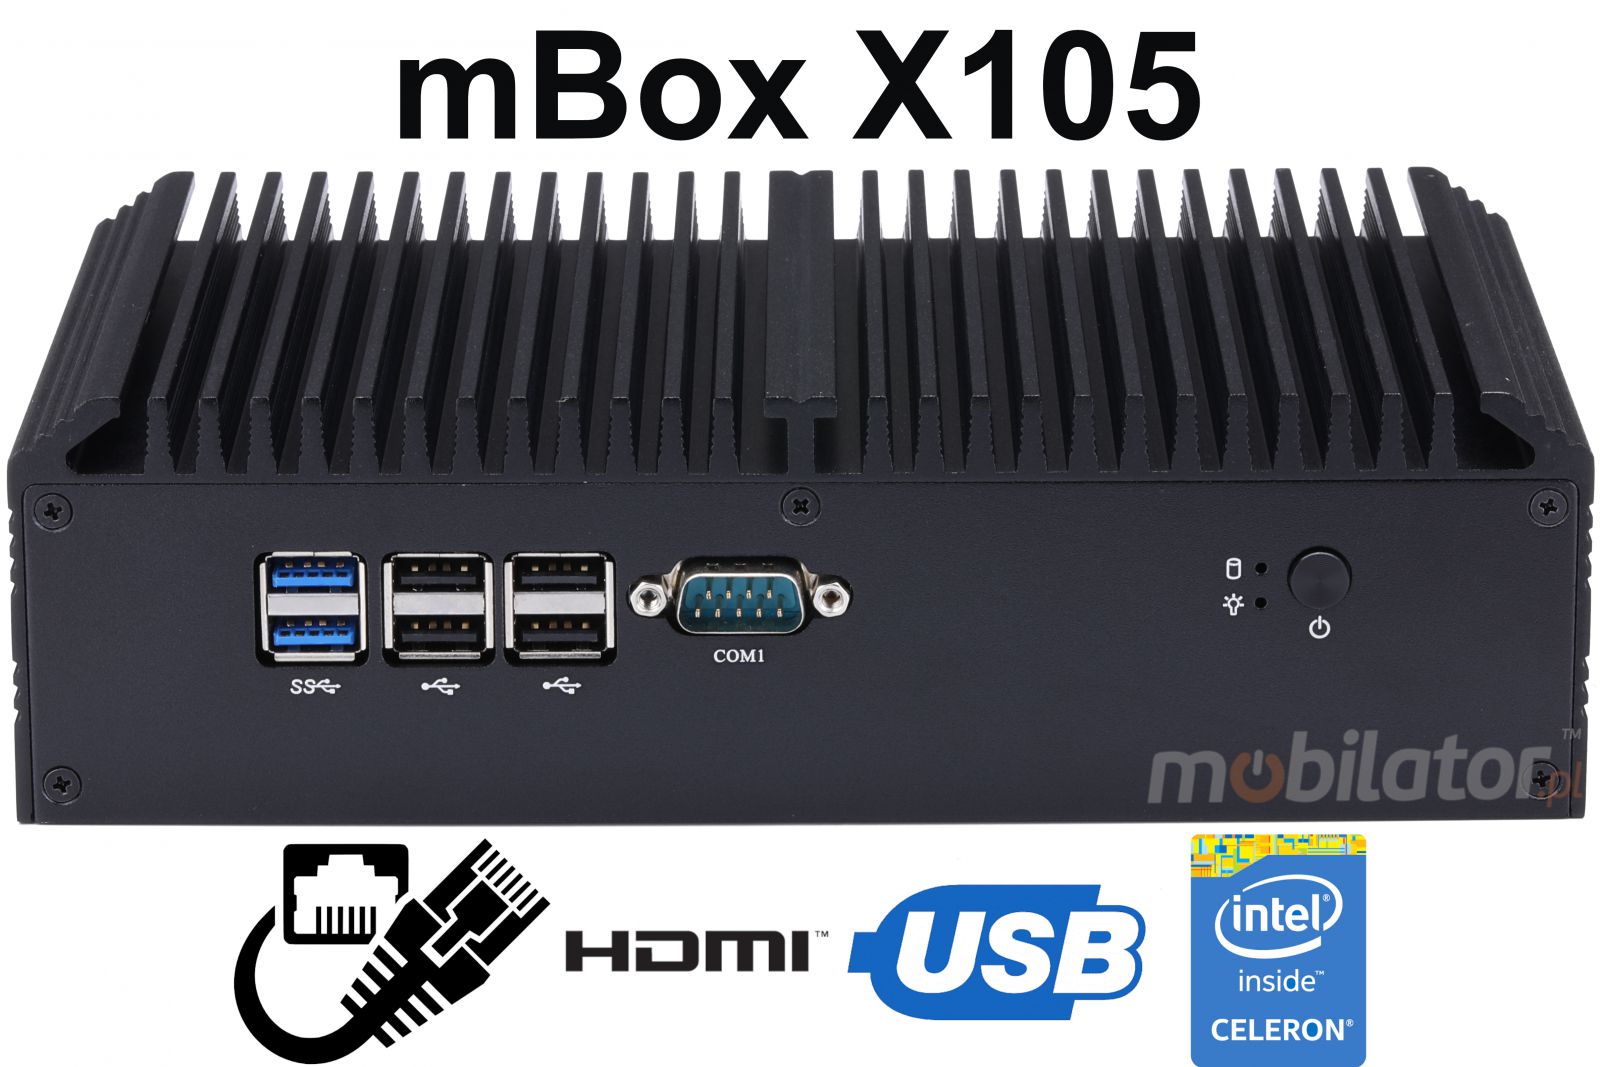 mBox X105 v.1 - Industrial Mini Computer with Intel Celeron 3855U Processor - M.2 disk - USB 3.0, 2x HDMI - Title image